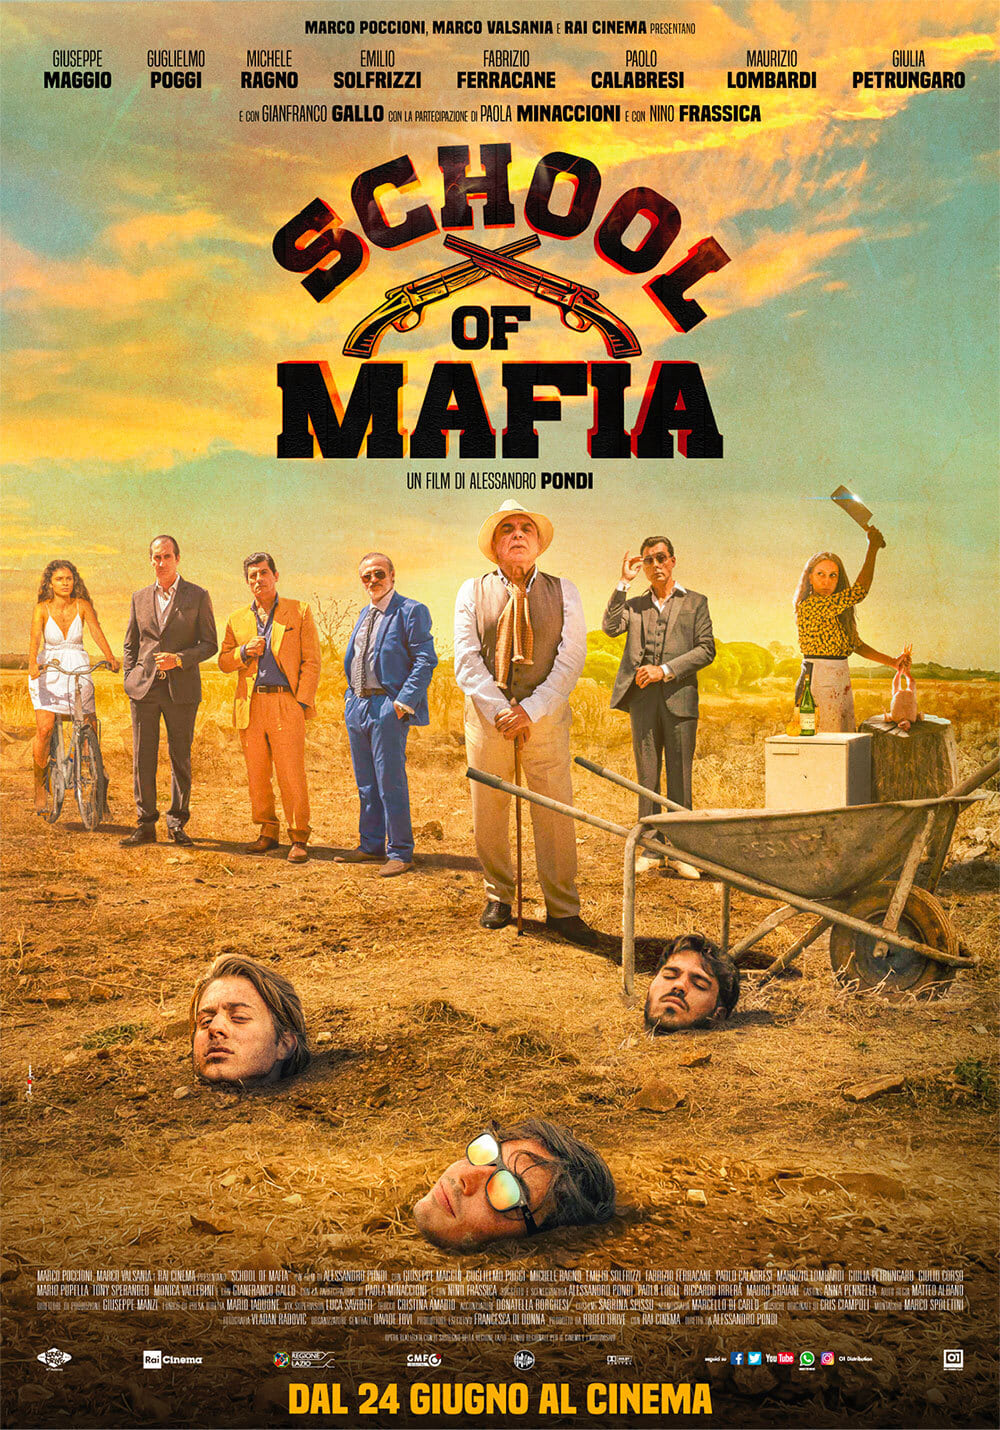 Poster for the movie "School of Mafia"